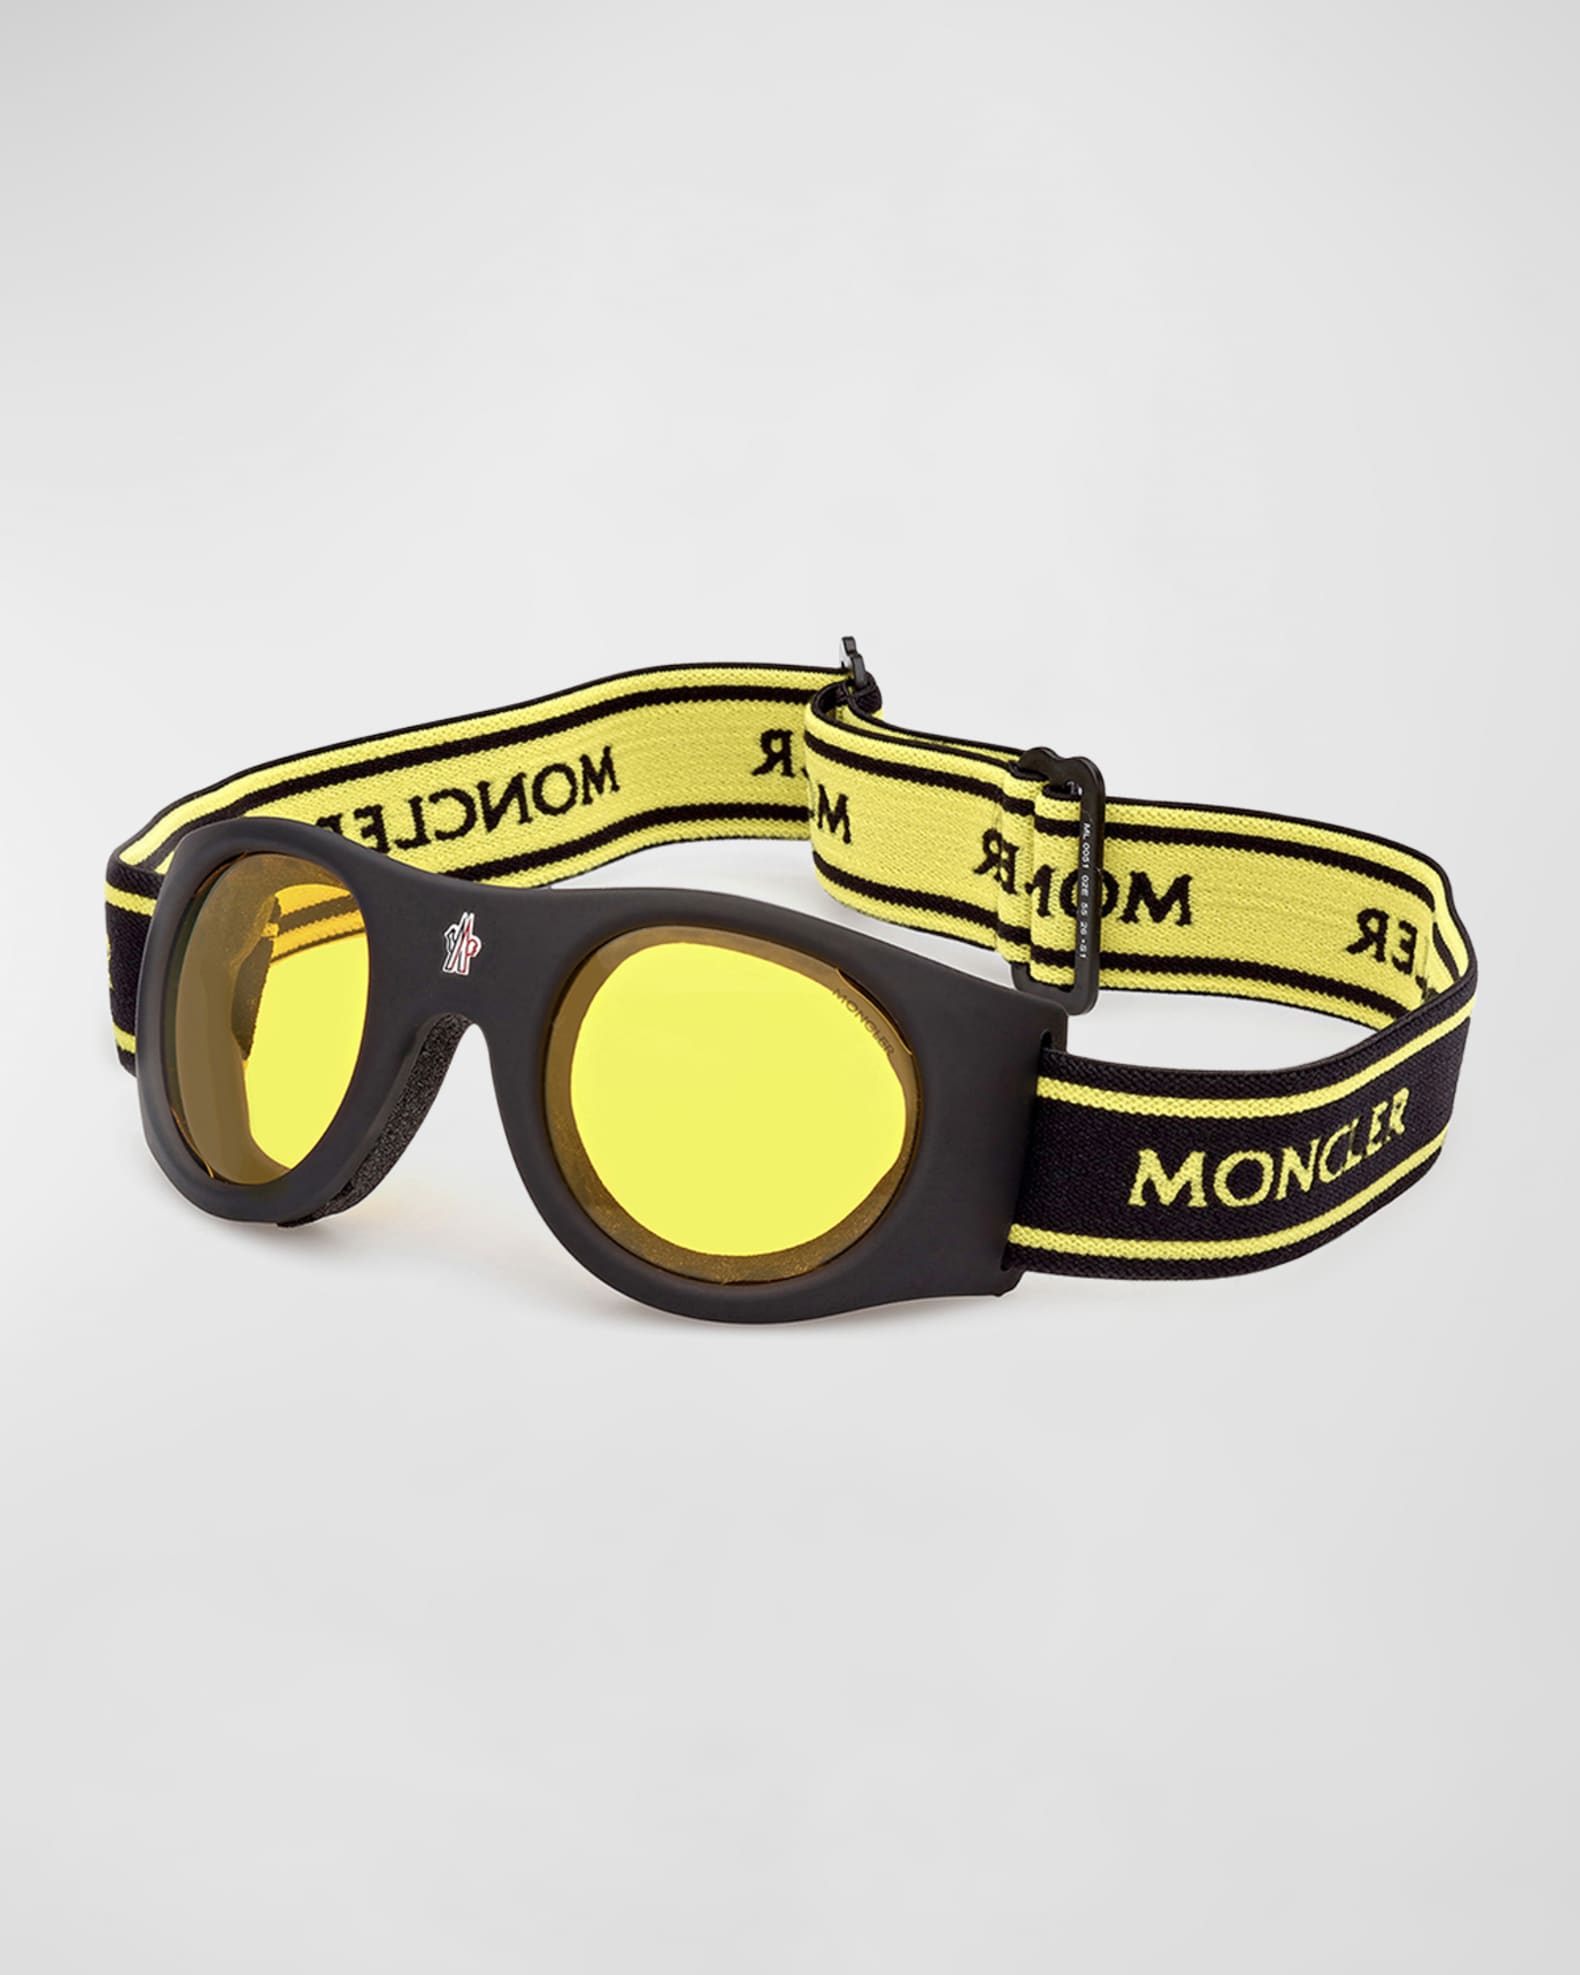 8 Moncler Palm Angels Black Matte Mirror Snow Goggles by Moncler